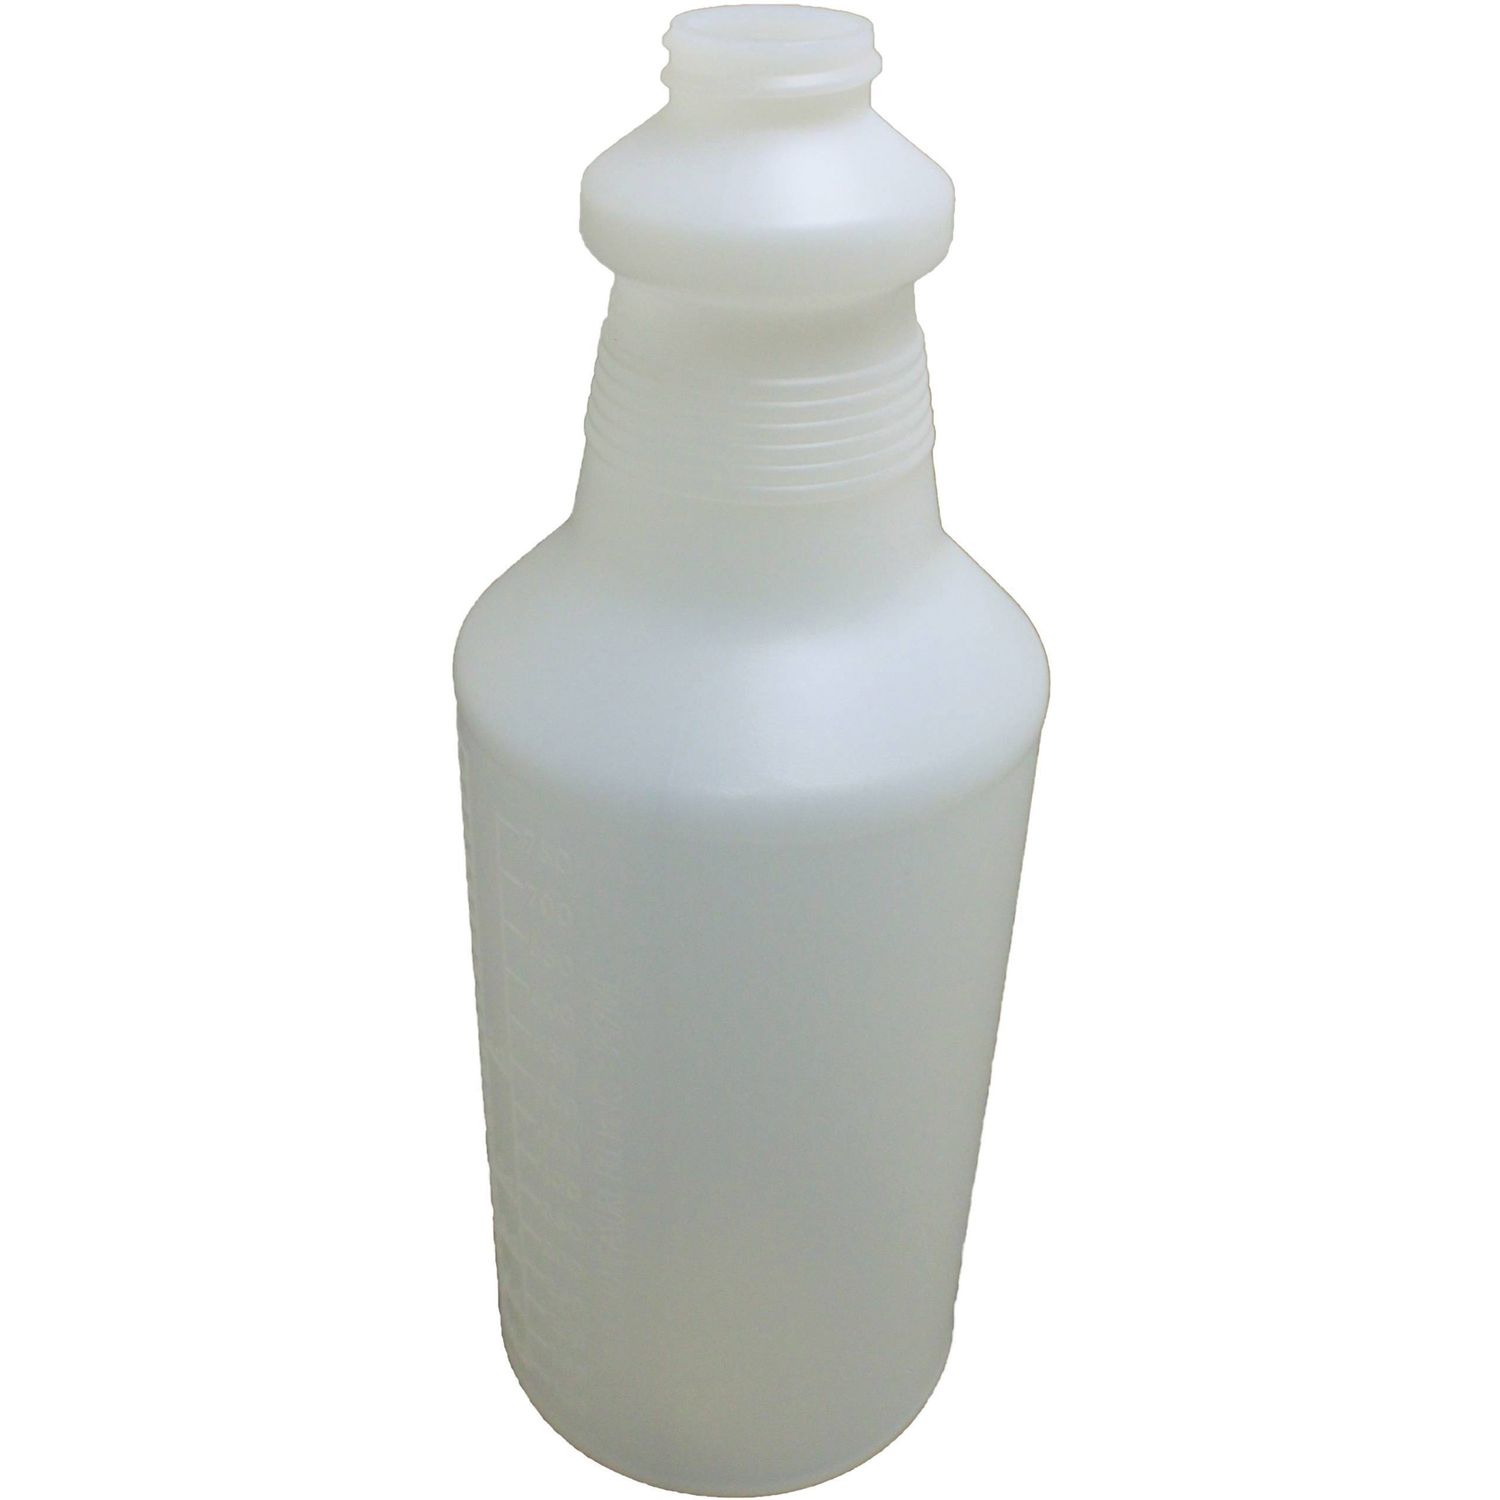 32 oz. Plastic Bottle with Graduations 2 lb, Polyethylene, Natural